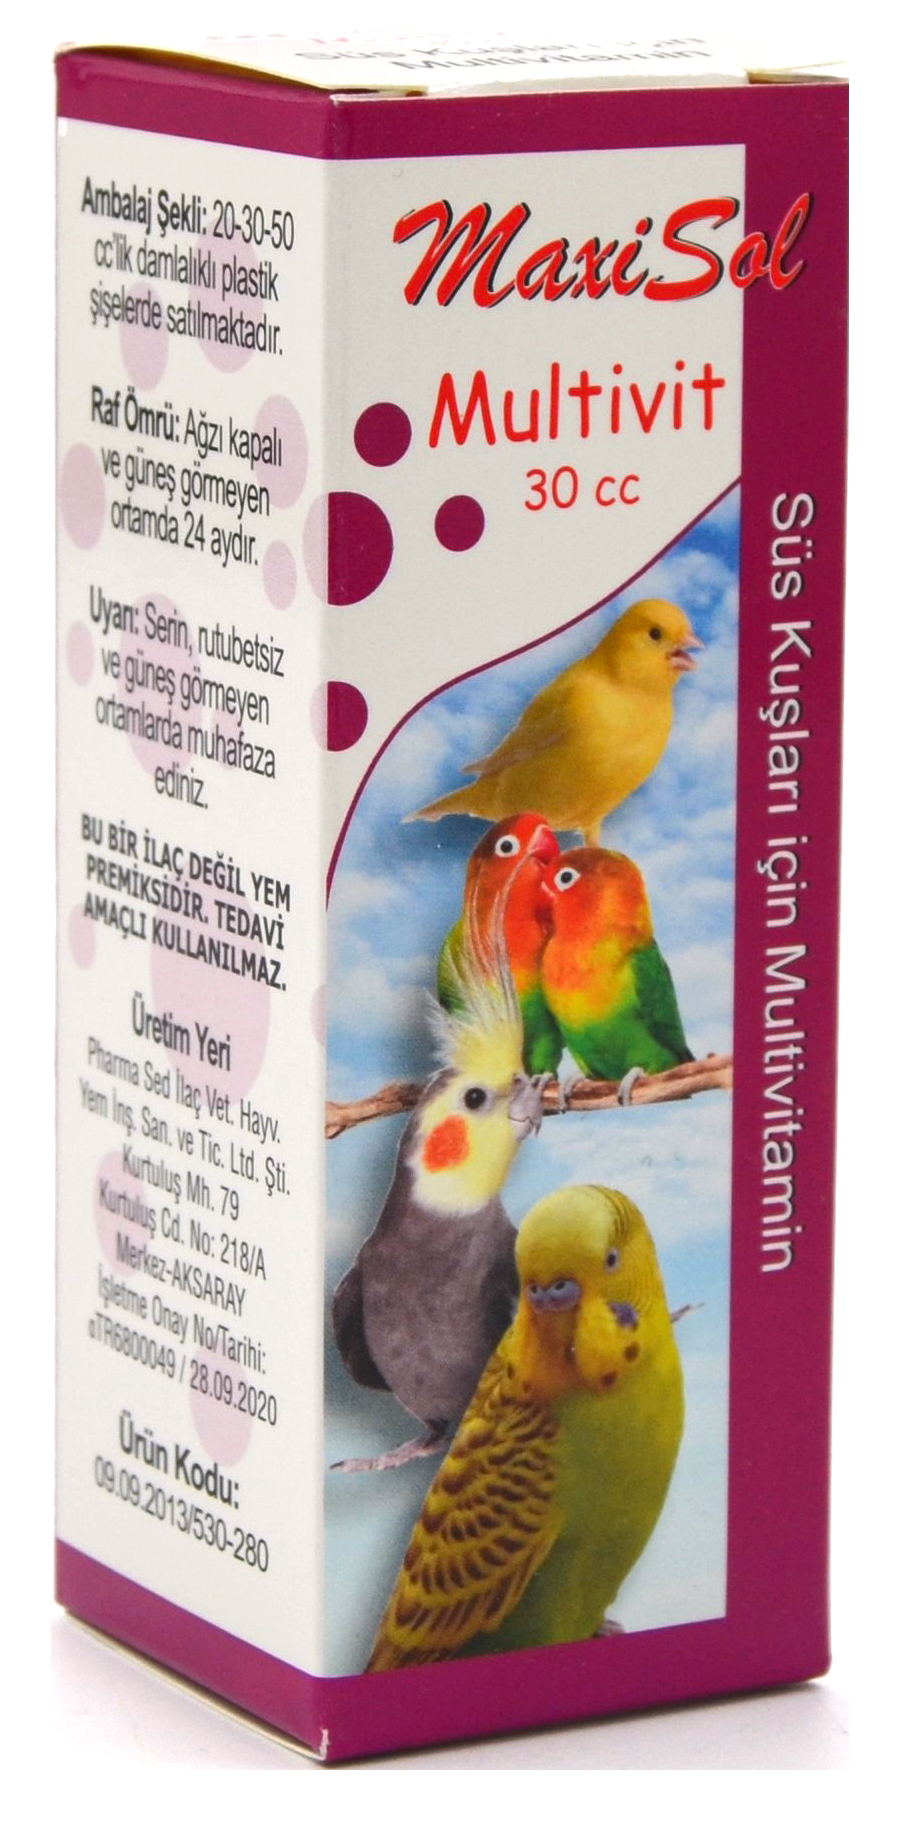 Maxisol Goldvit 30cc Ötüm ve Enerji + Multivit 30cc + Kalamar Kemiği 30gr Sıcacık Kuş Vitamin Seti